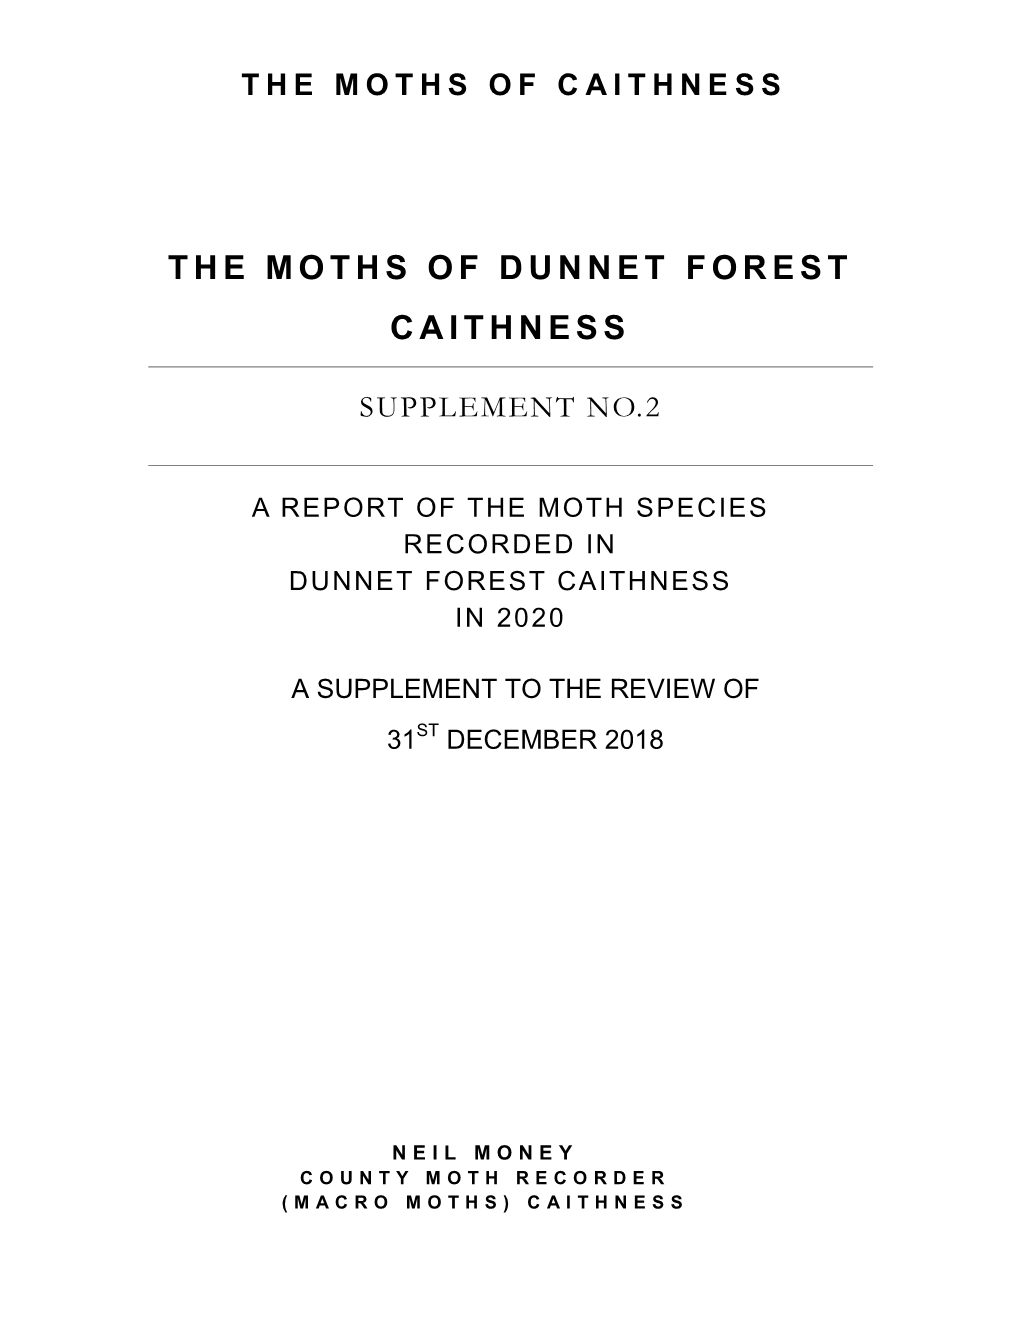 Dunnet Forest 2020